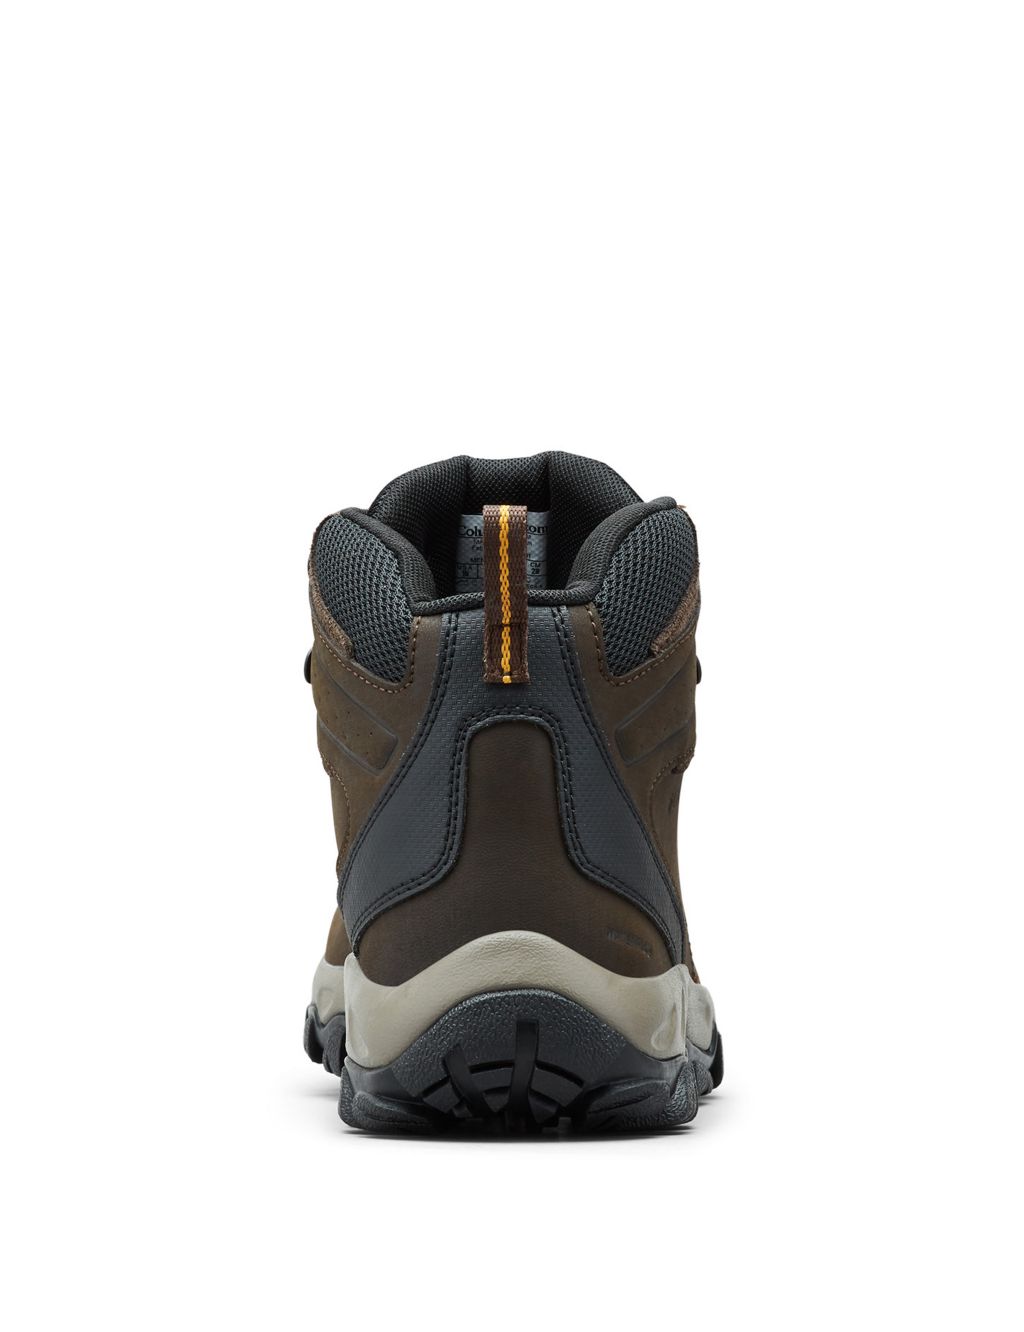 Newton Ridge Plus II Waterproof Walking Boots image 3